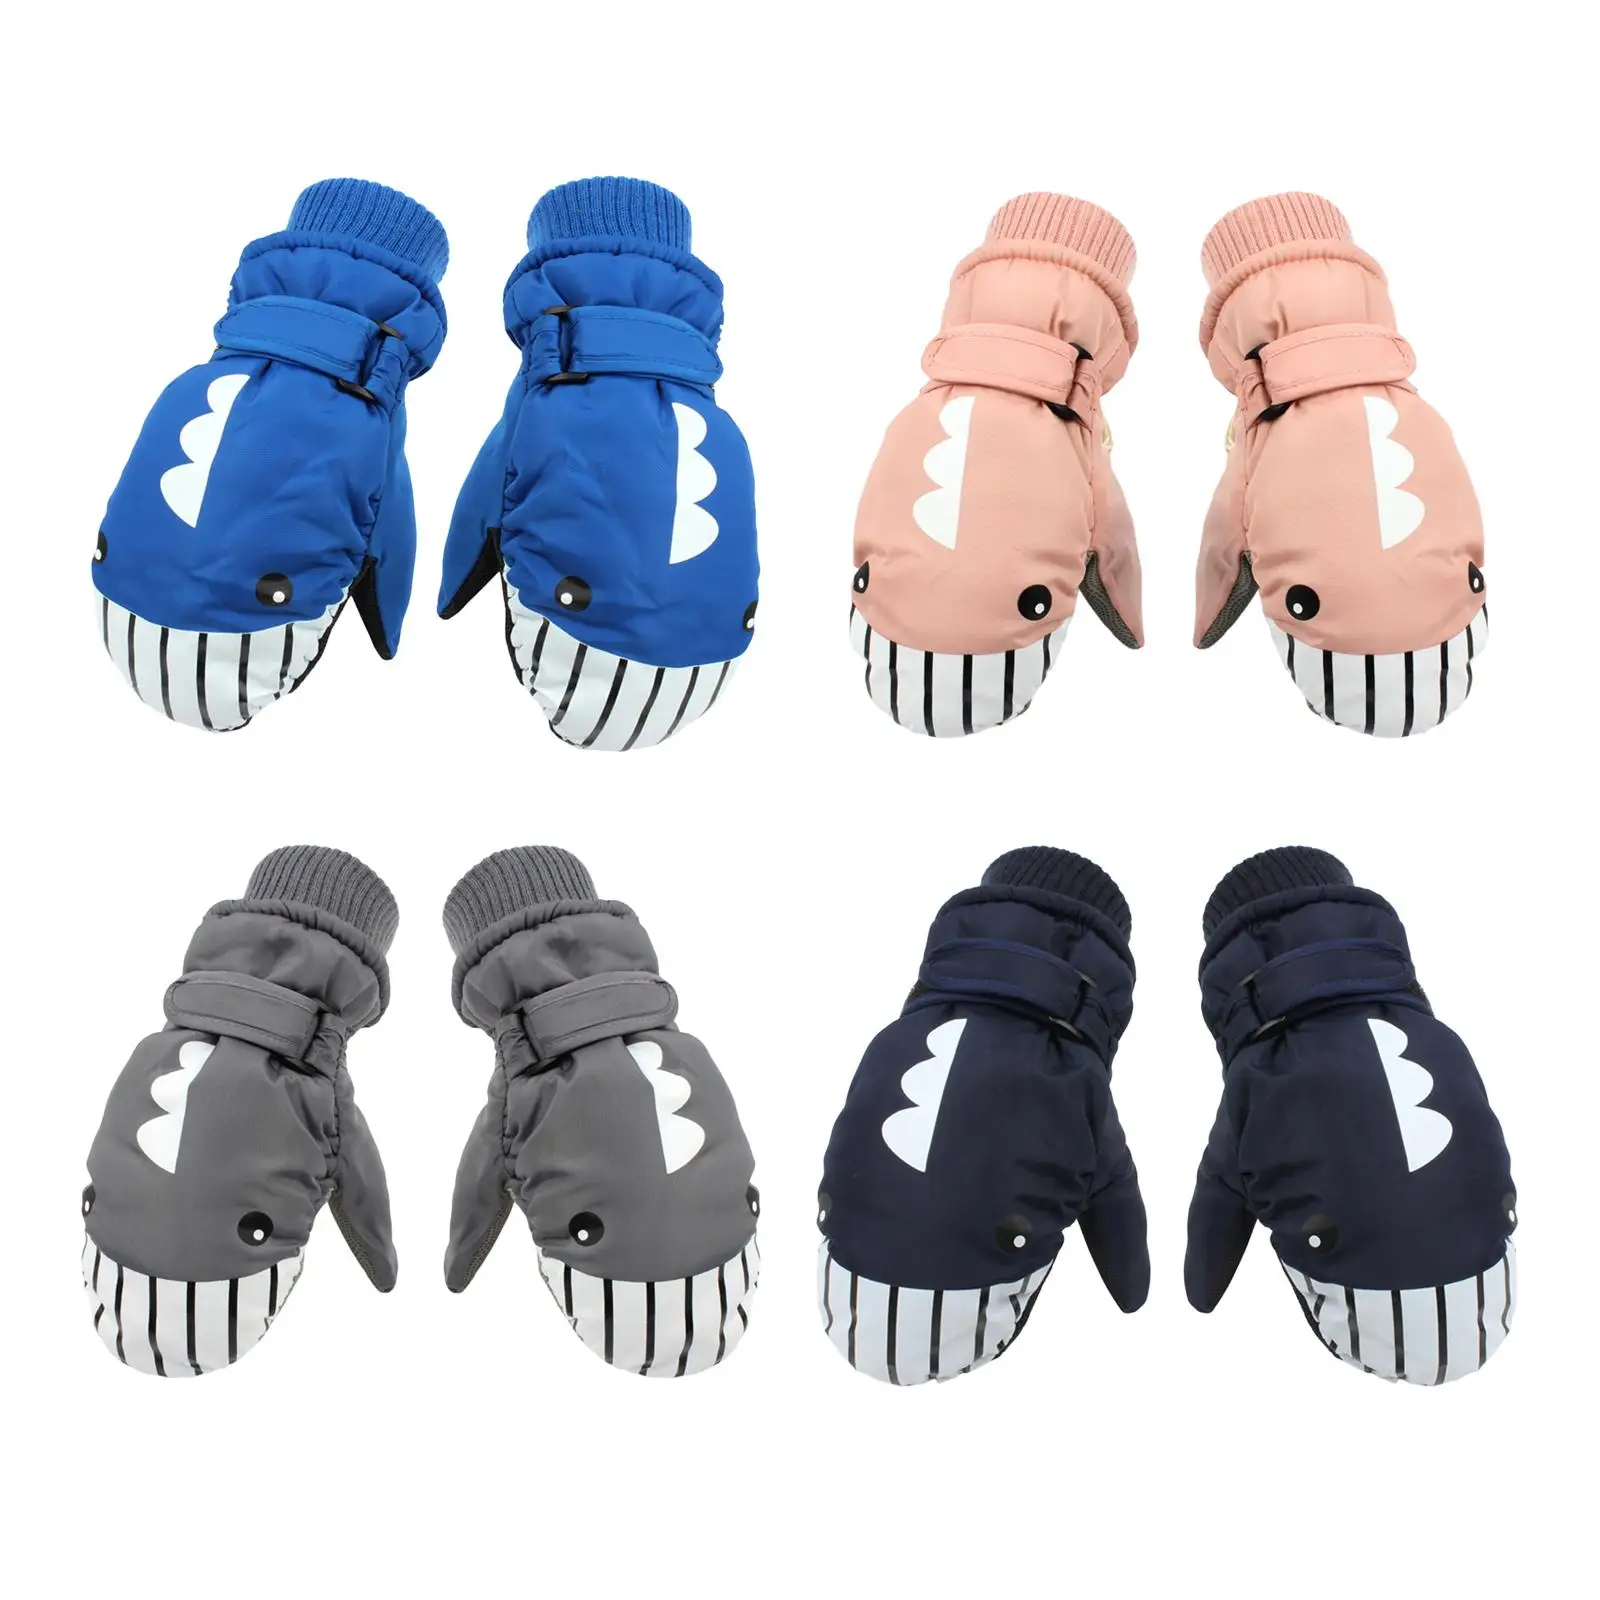 Kids Winter Gloves Warm Gloves Waterproof Nonslip Lightweight Snow Ski Gloves for Running Outdoor Riding Skating Cold Weather